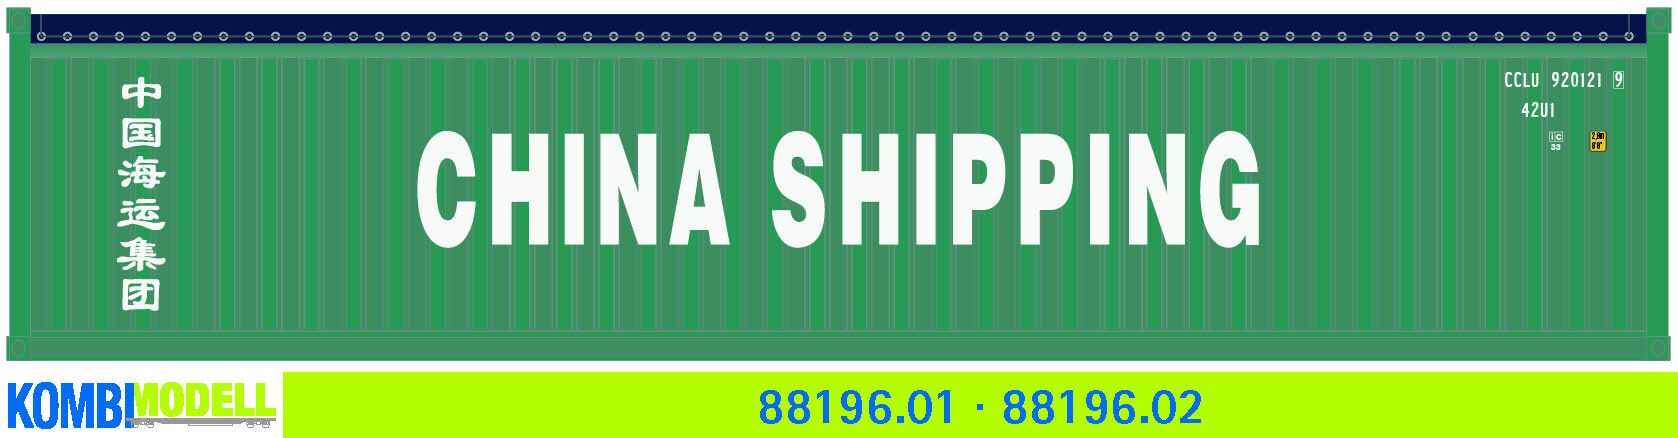 Kombimodell 88196.02 Ct 40` Open Top China Shipping  SoSe 